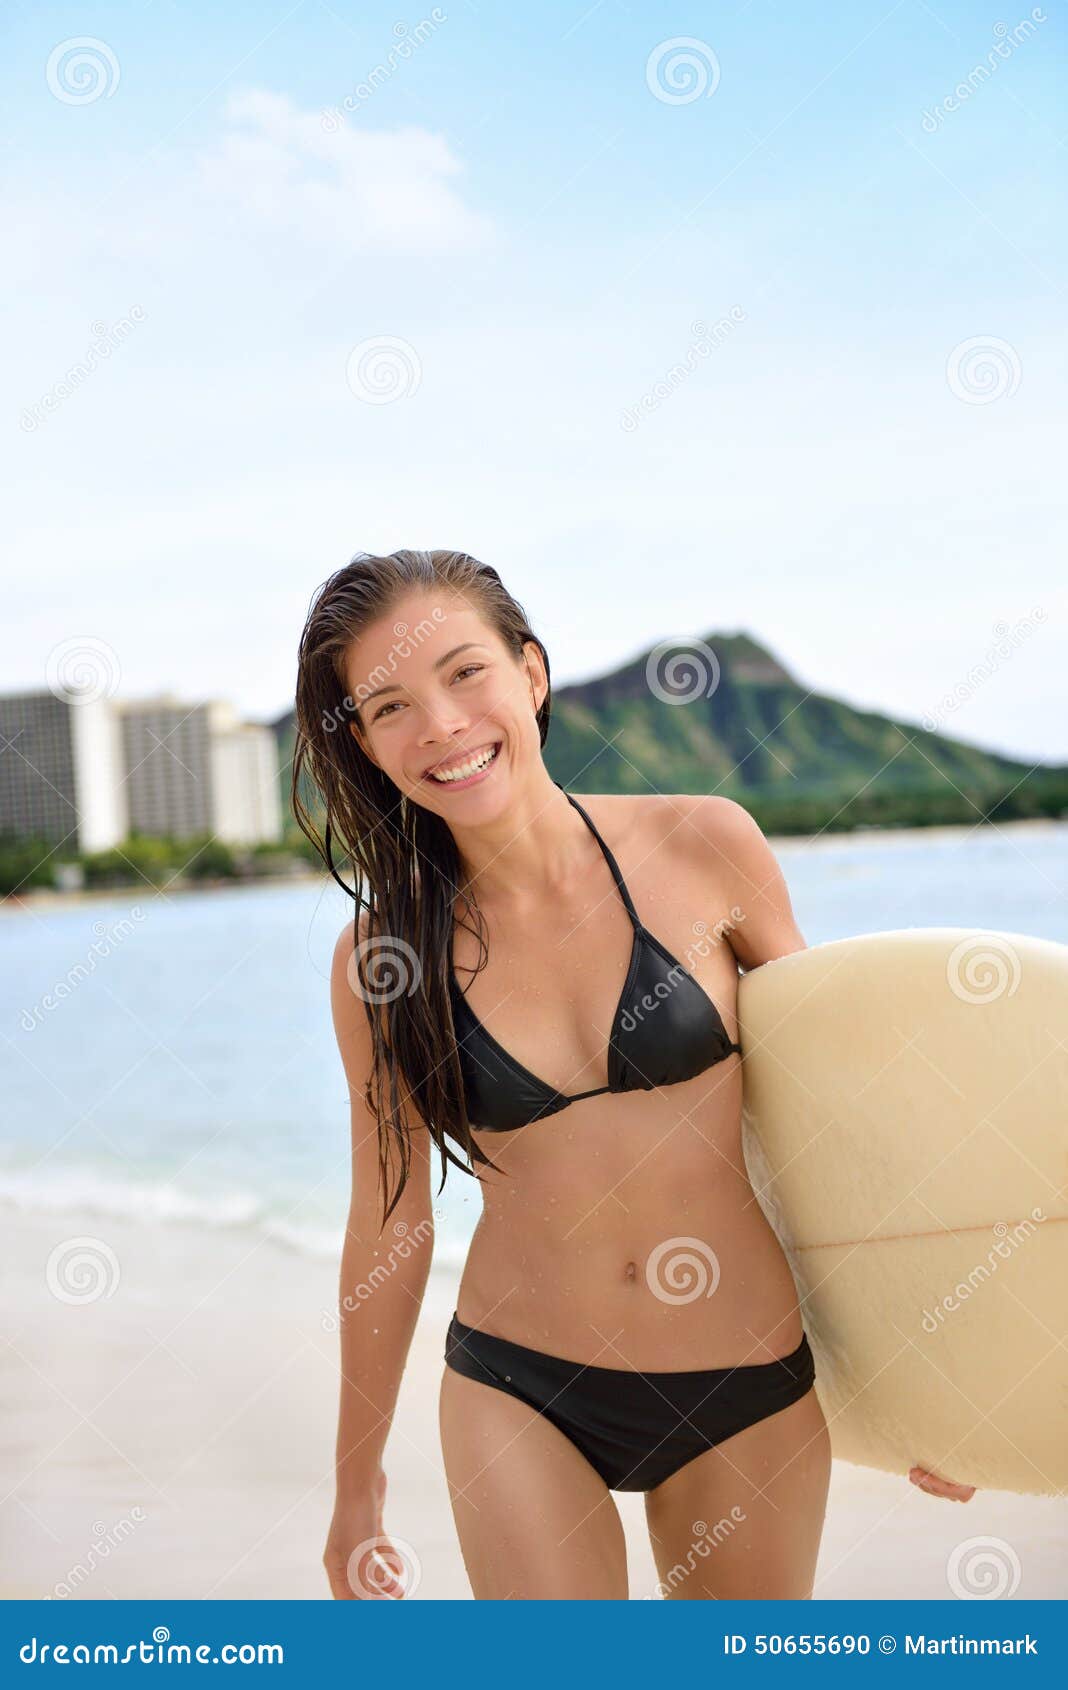 Hawaii beach girl ass - Nude pic